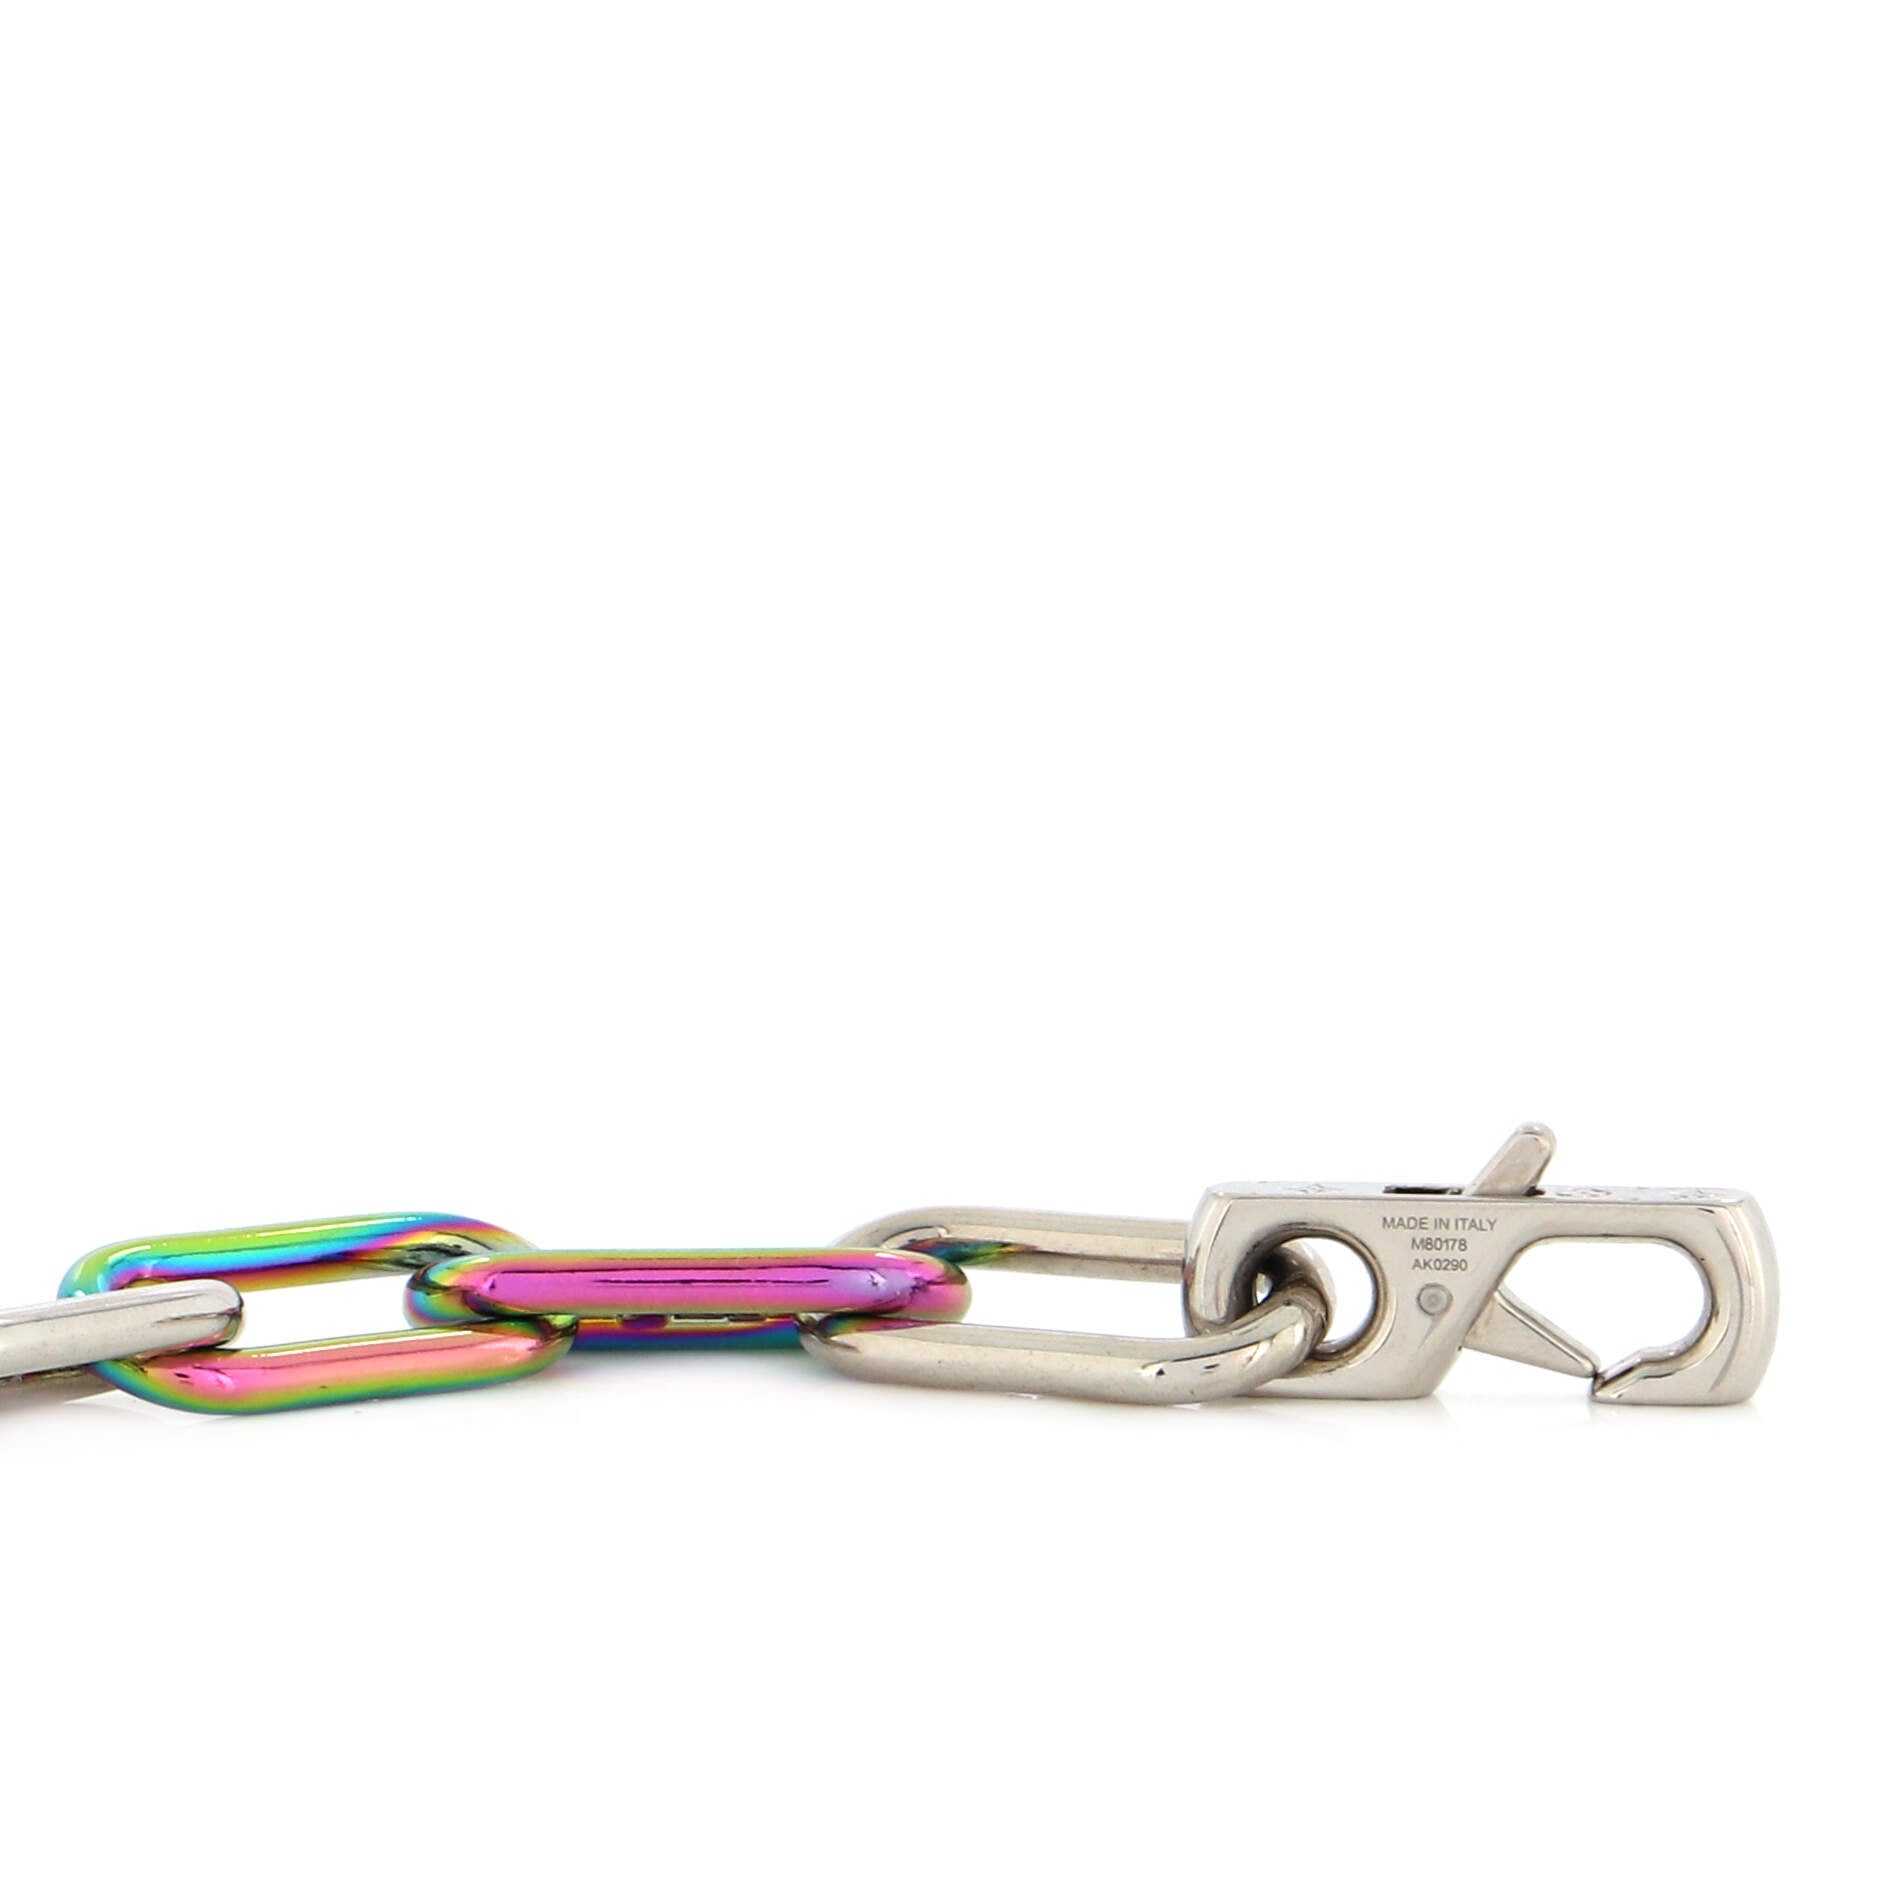 Louis Vuitton Chain Bracelet Monogram RainbowLouis Vuitton Chain